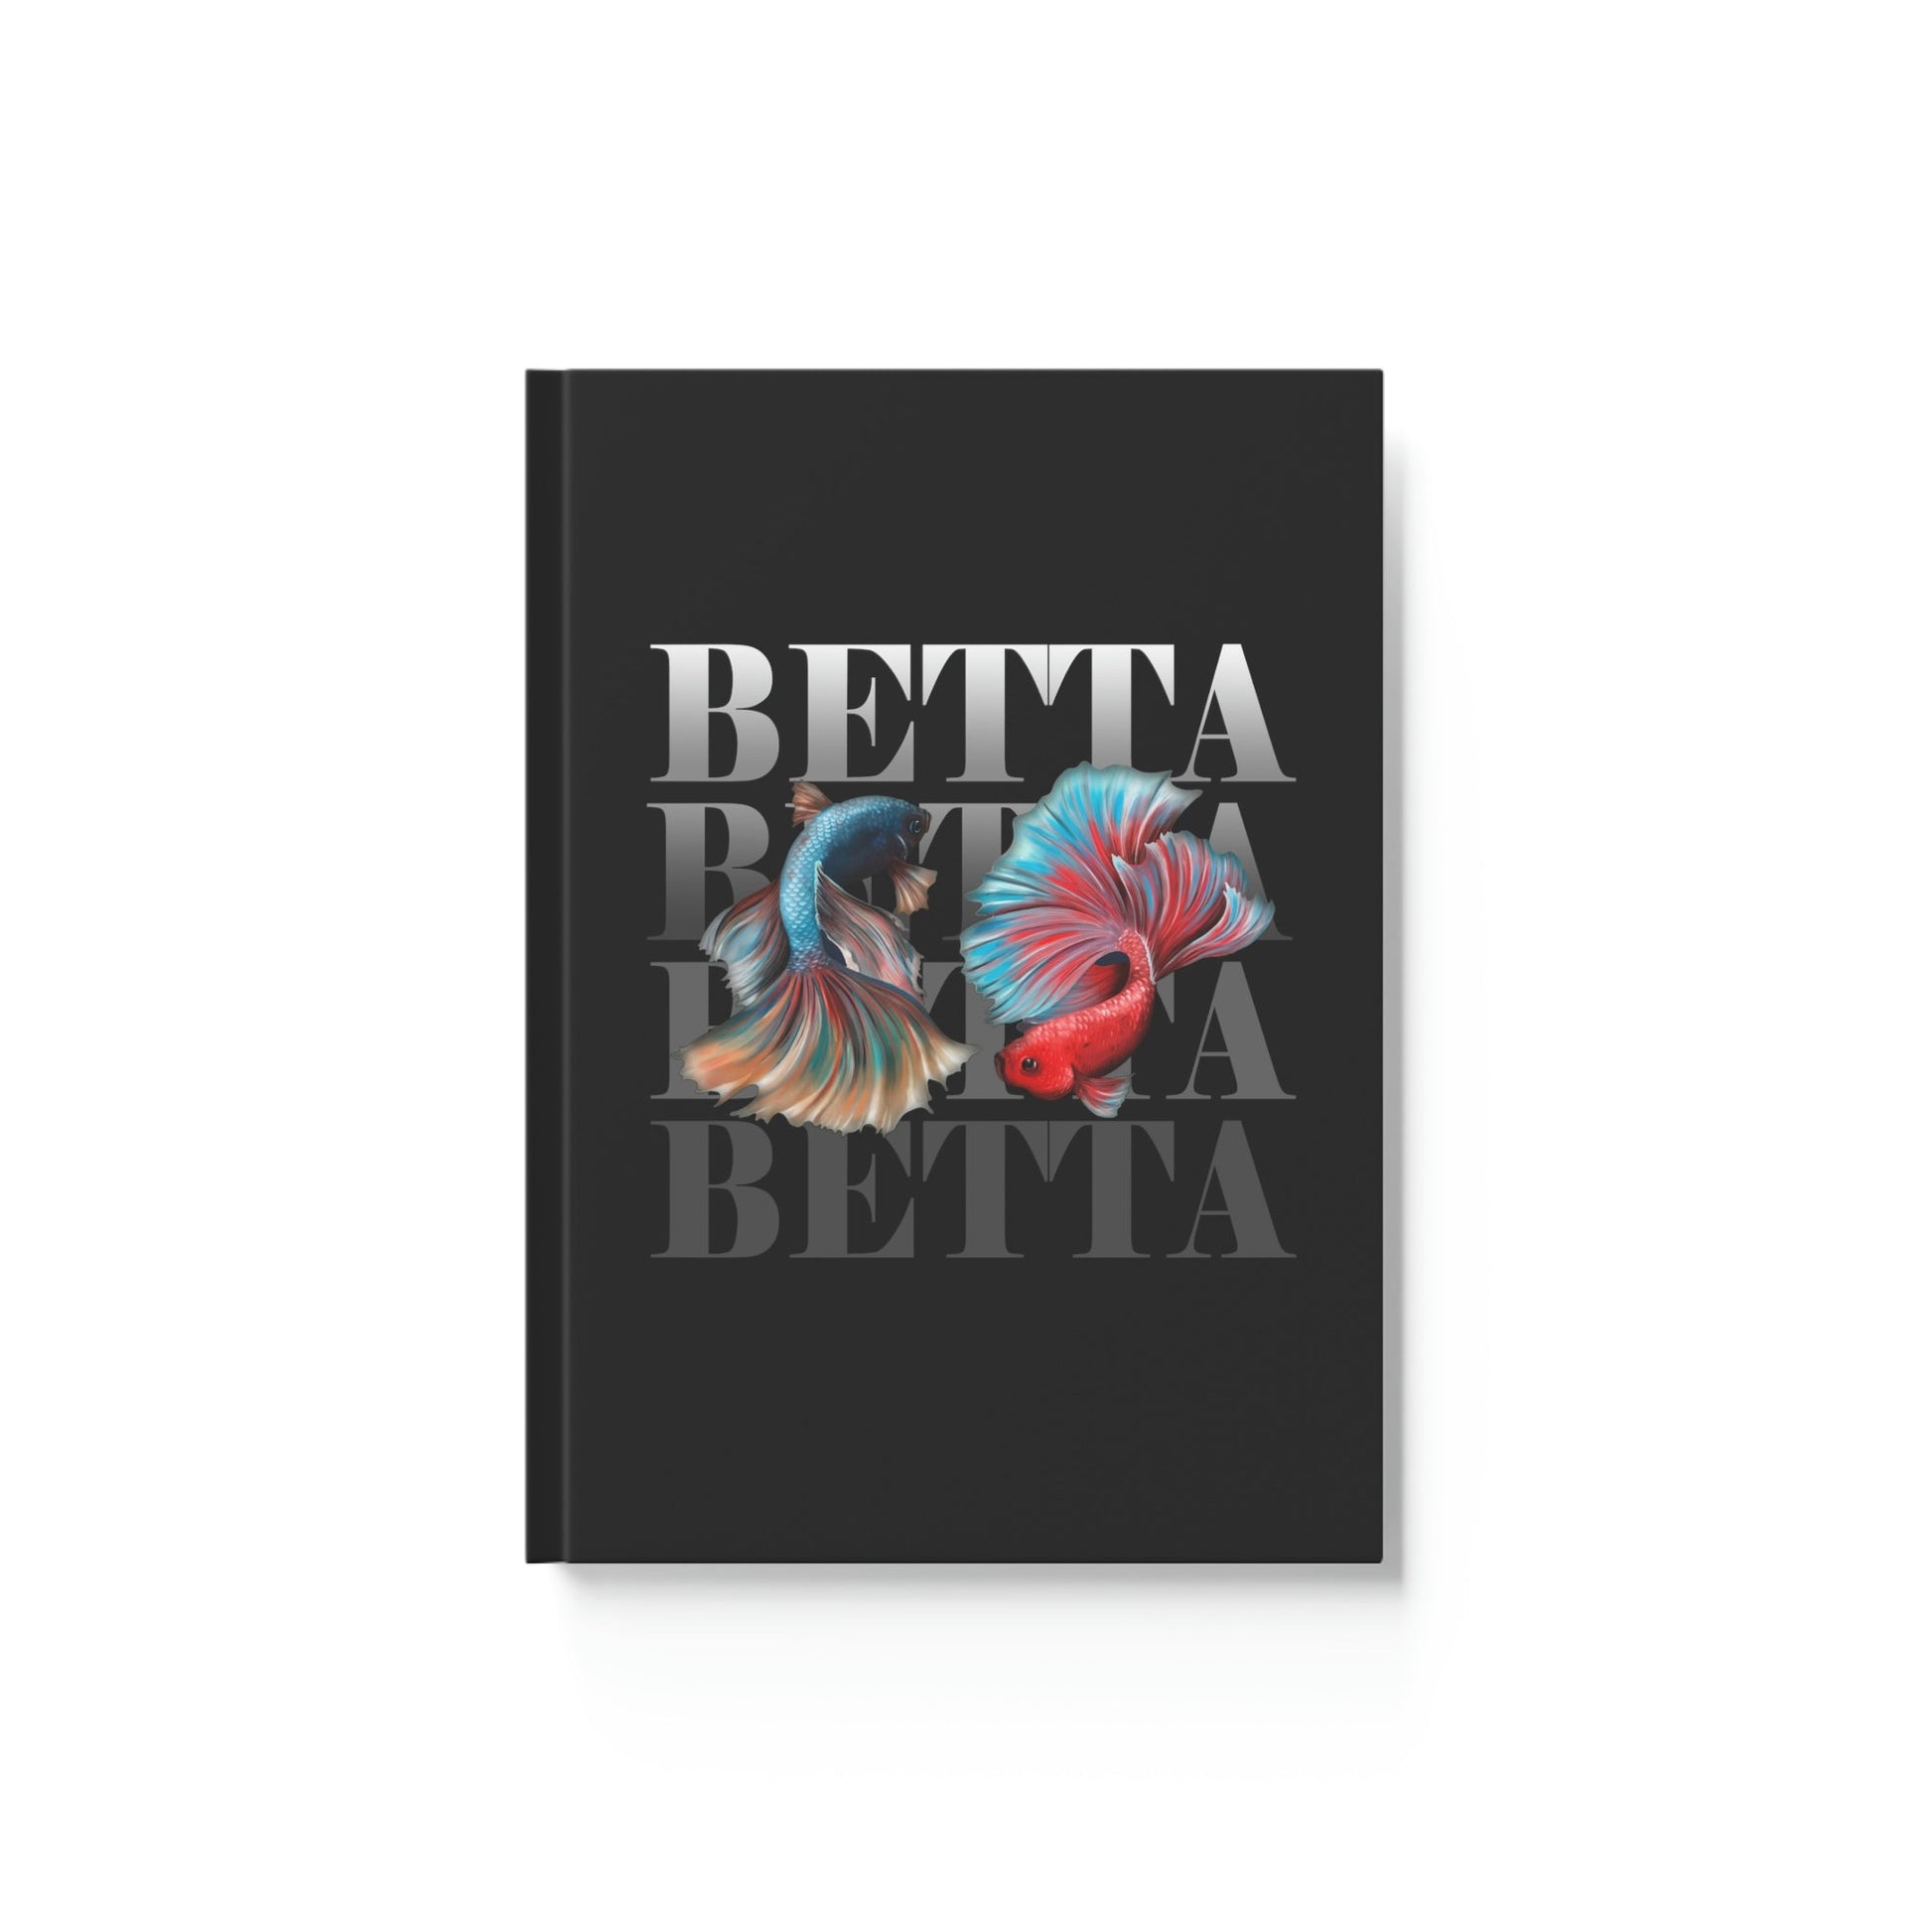 Betta Betta Betta Hard Backed Journal